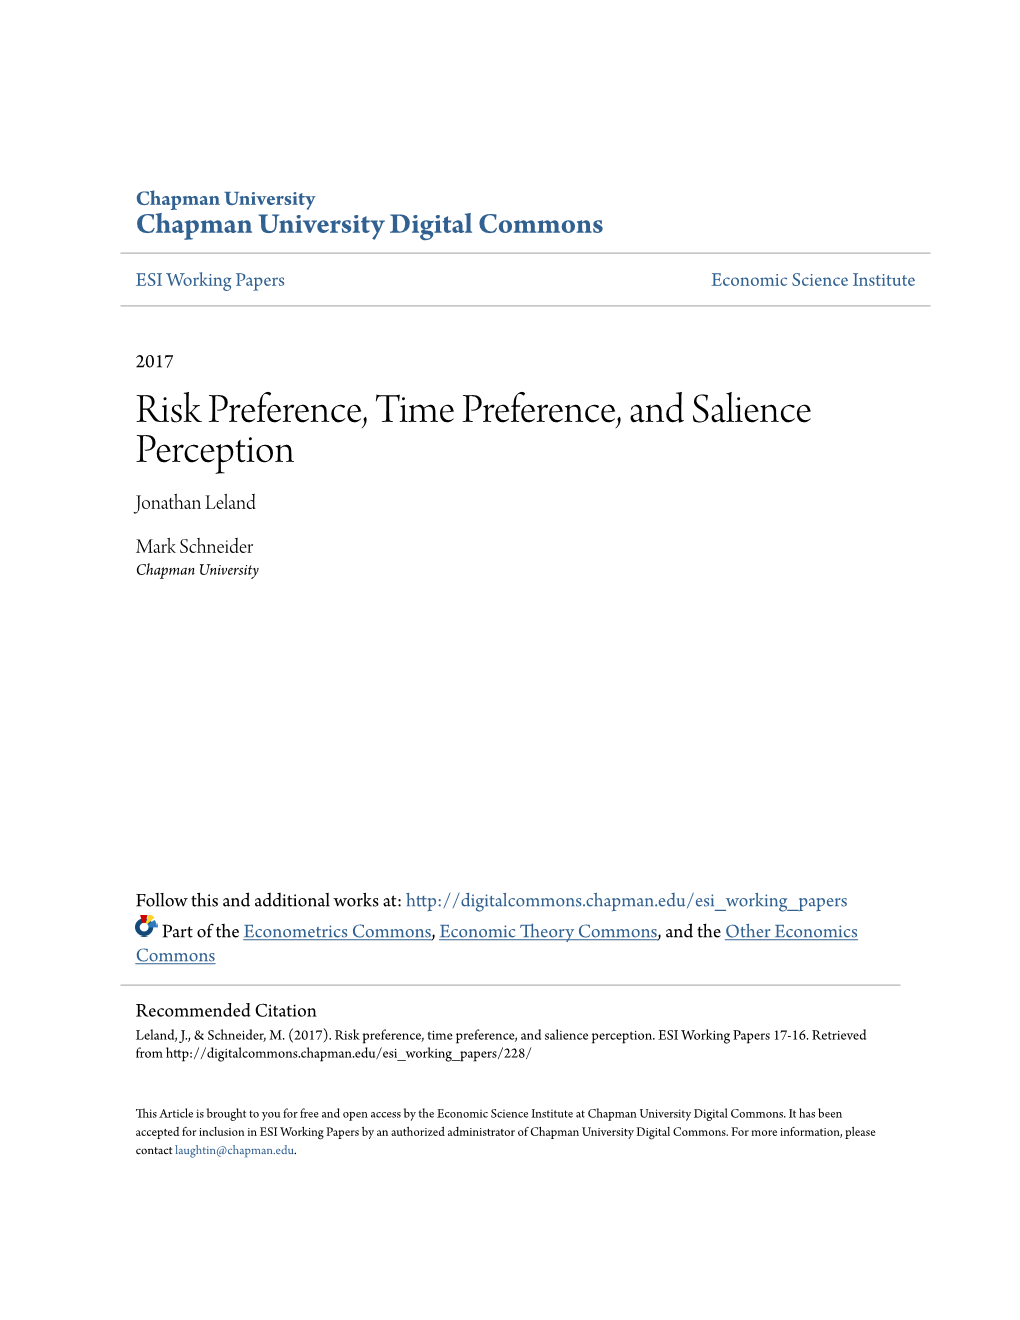 Risk Preference, Time Preference, and Salience Perception Jonathan Leland